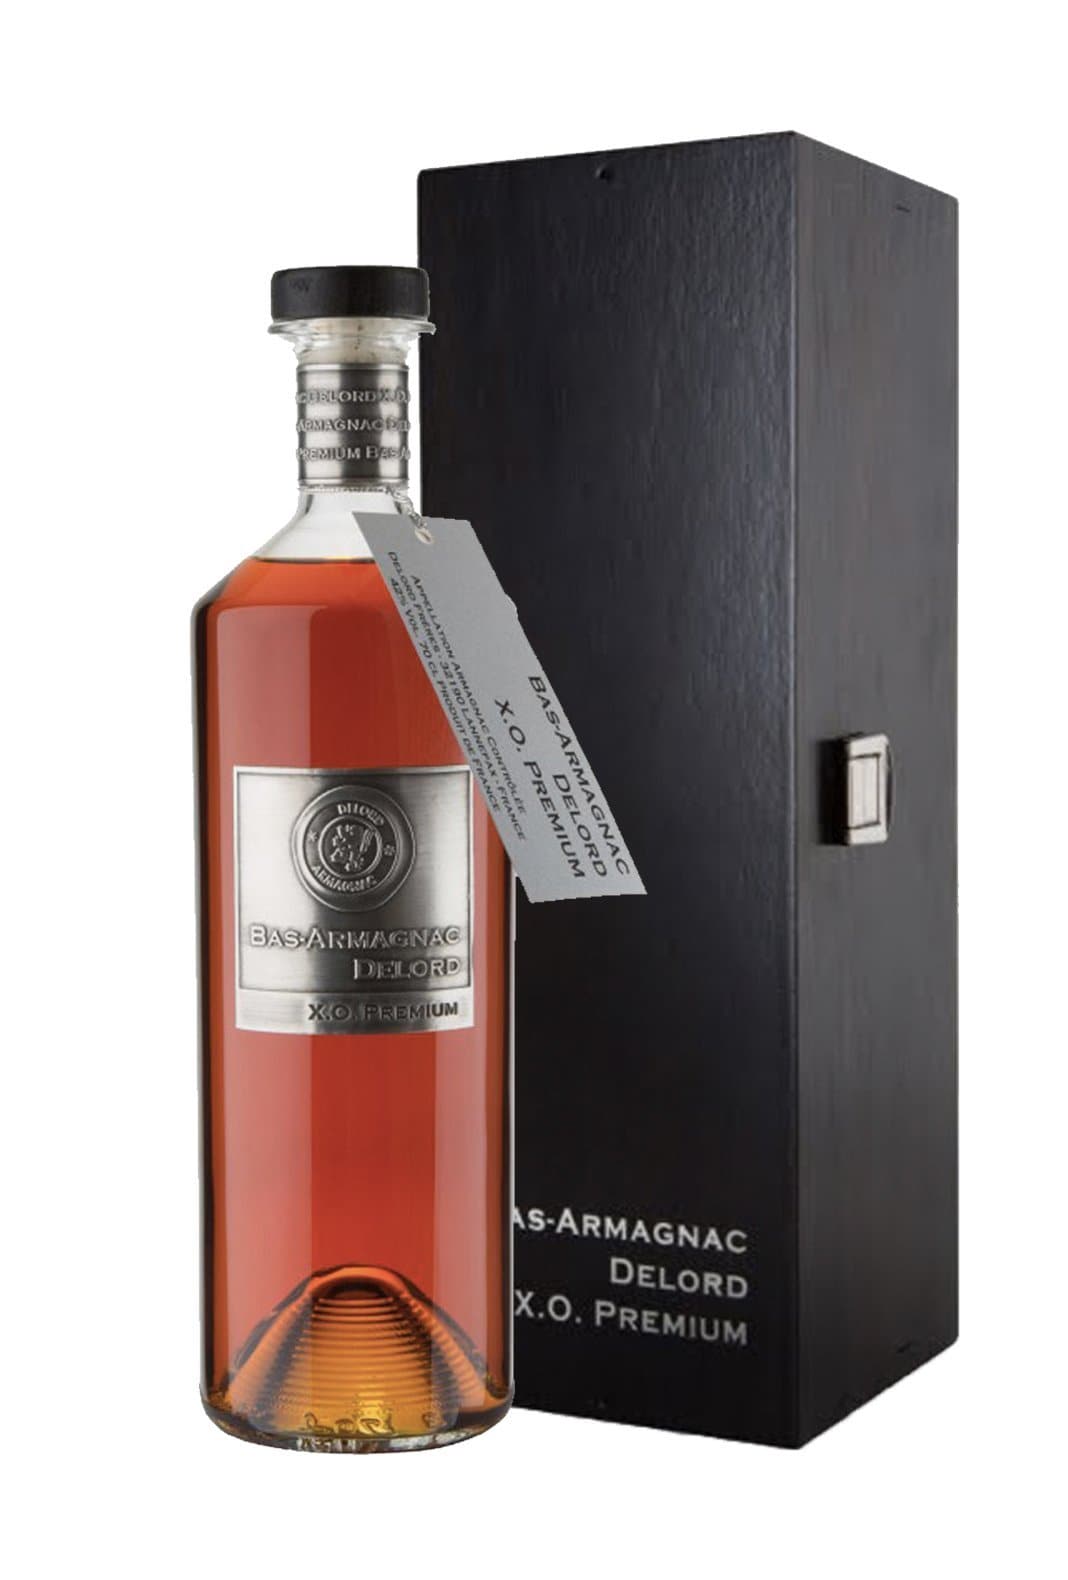 Delord Bas Armagnac XO Premium 25-40 years 42% 700ml | Brandy | Shop online at Spirits of France